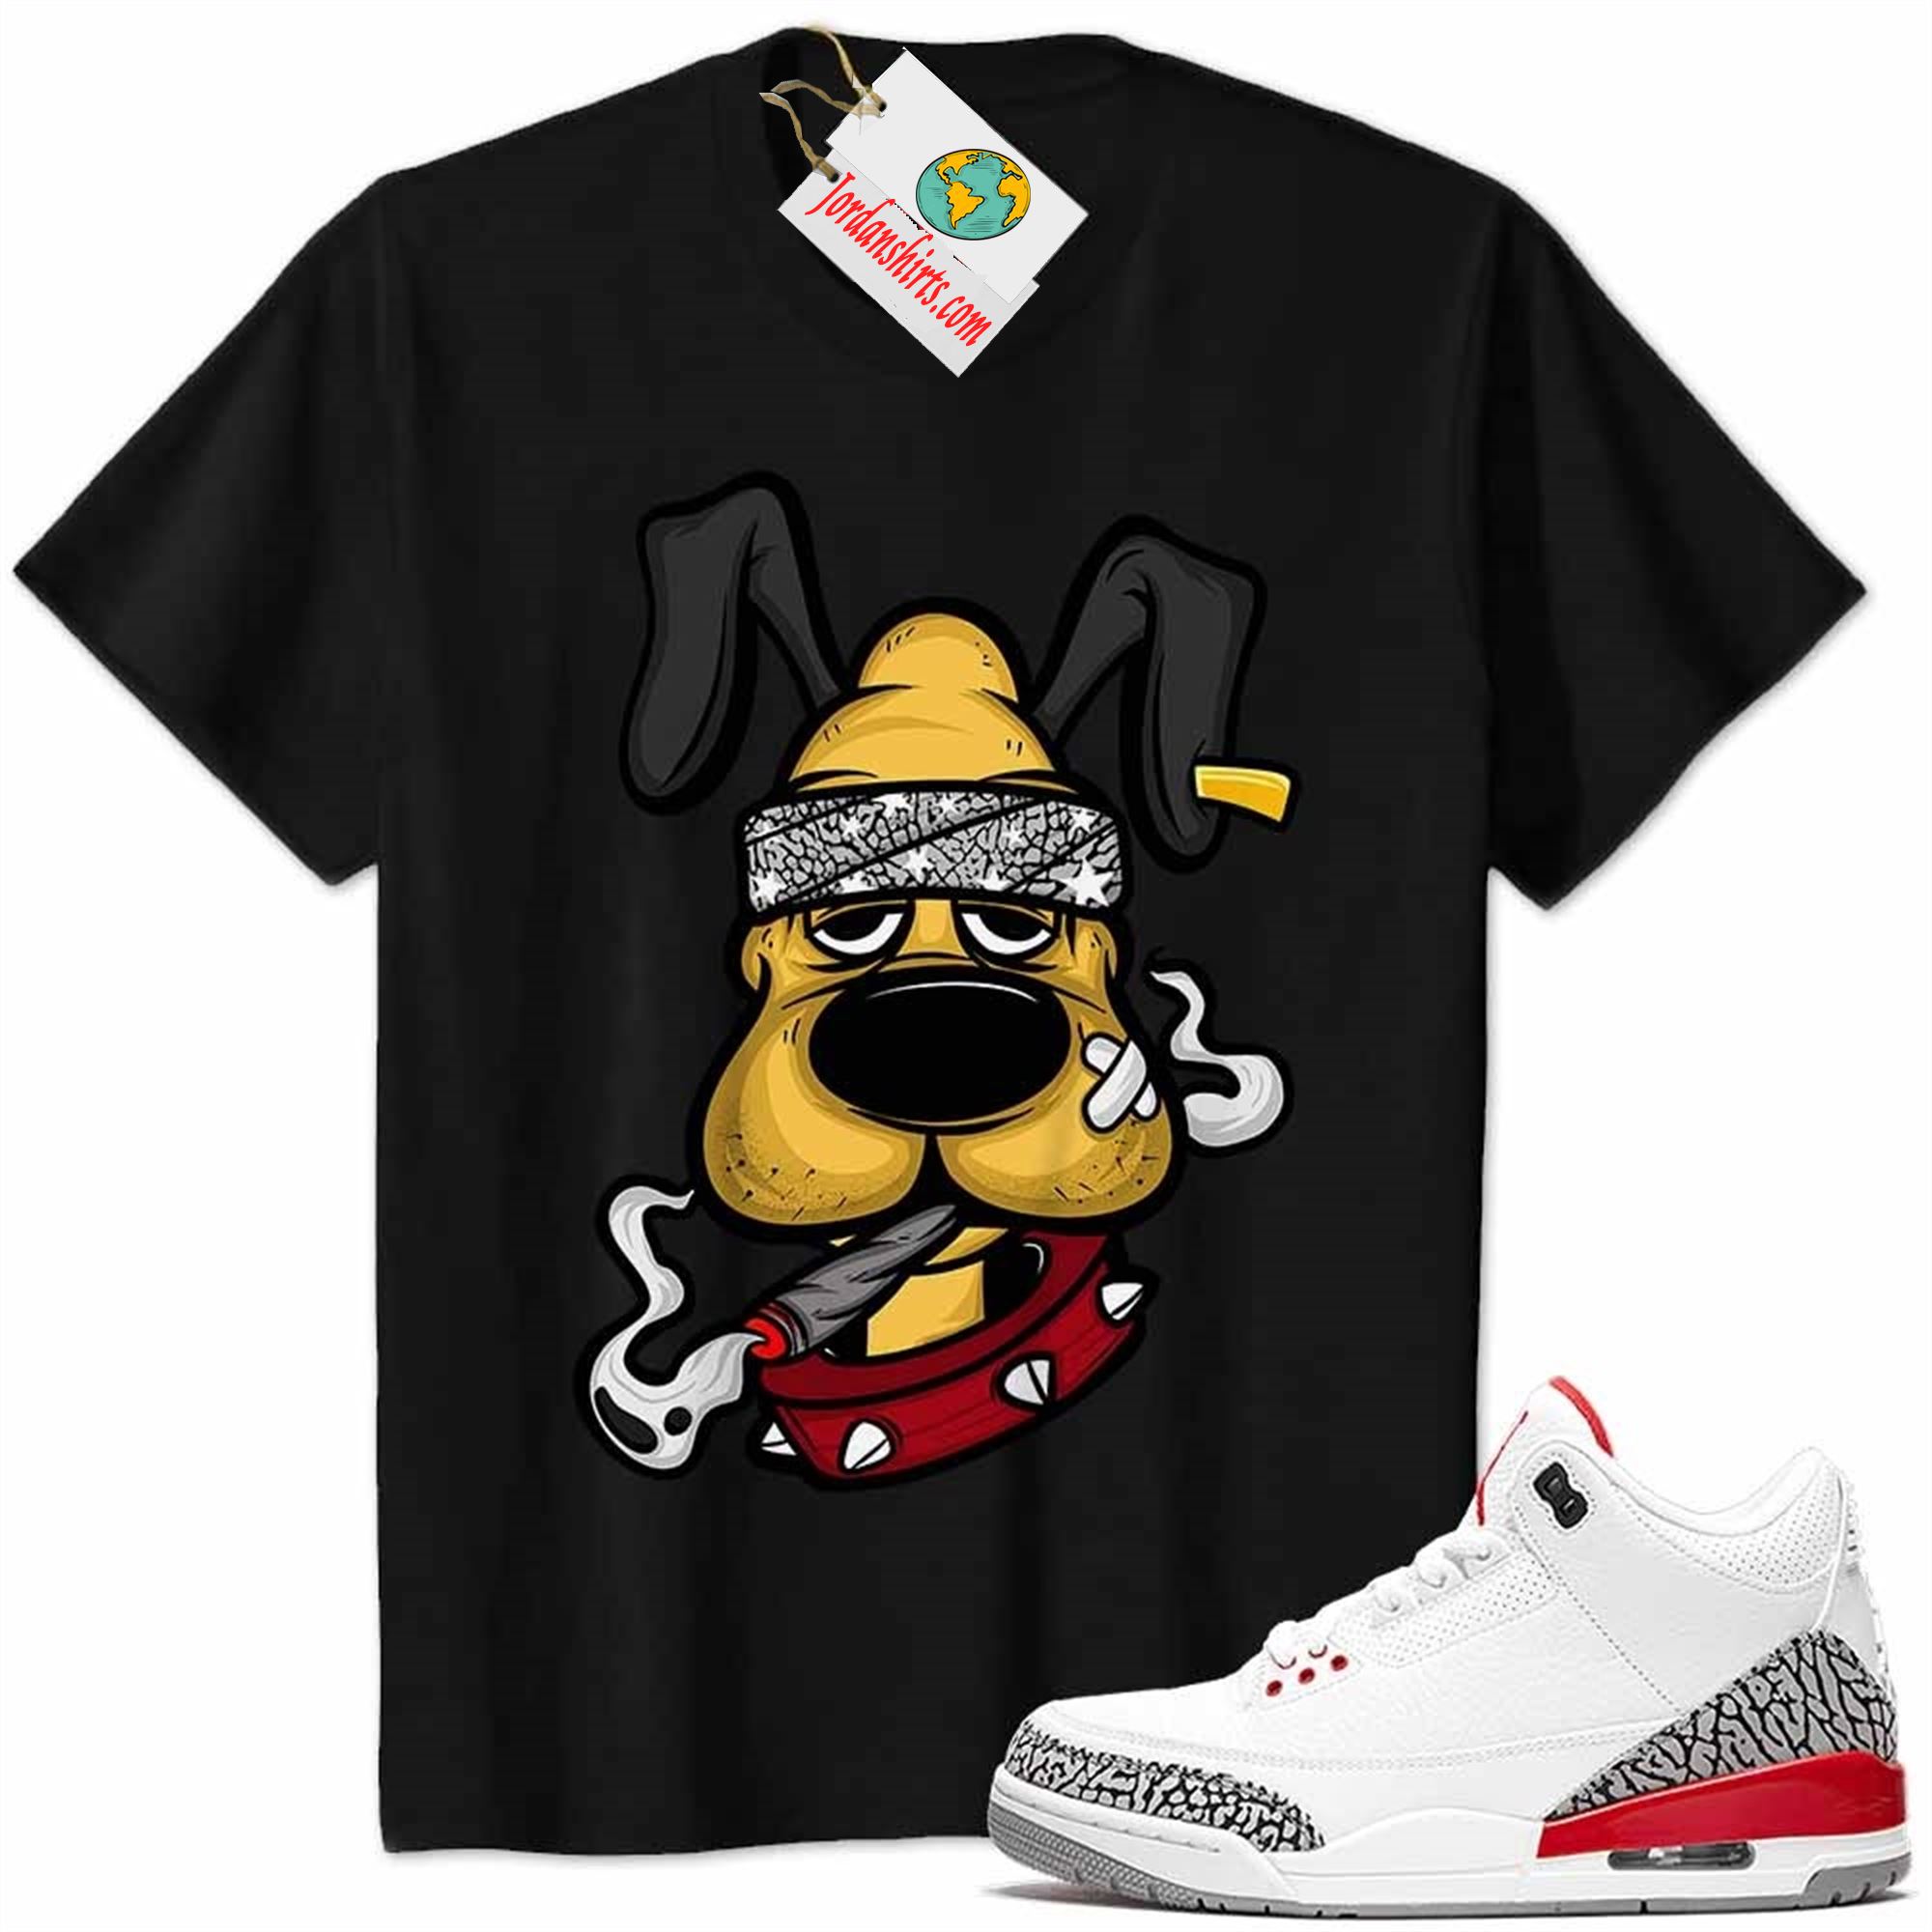 Jordan 3 Shirt, Gangster Pluto Smoke Weed Black Air Jordan 3 Katrina 3s Plus Size Up To 5xl